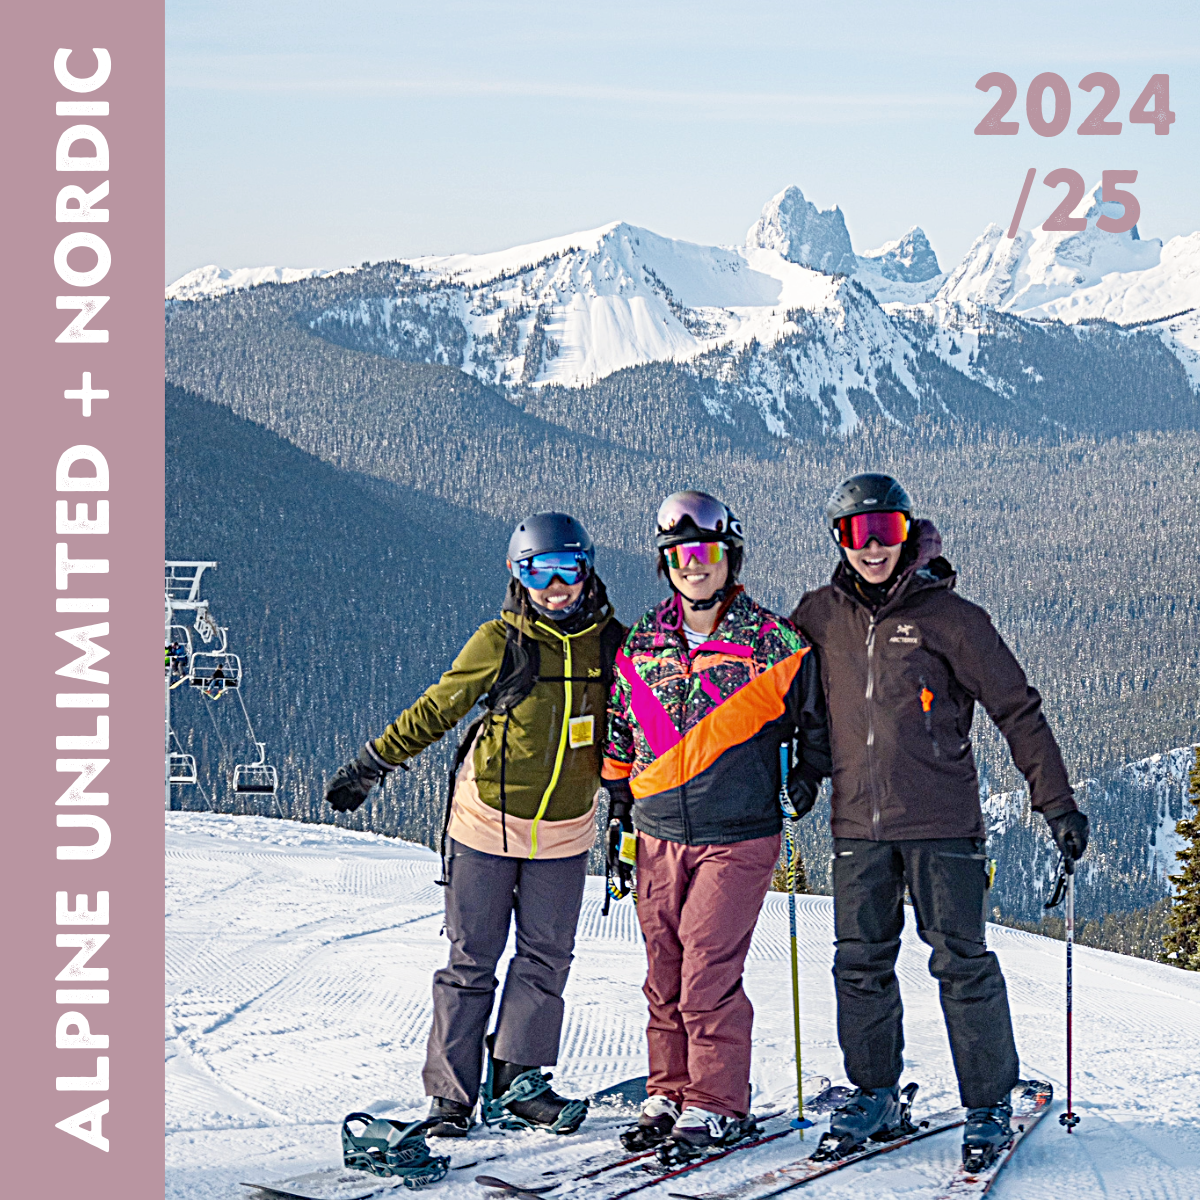 Unlimited Alpine / Nordic Season Pass